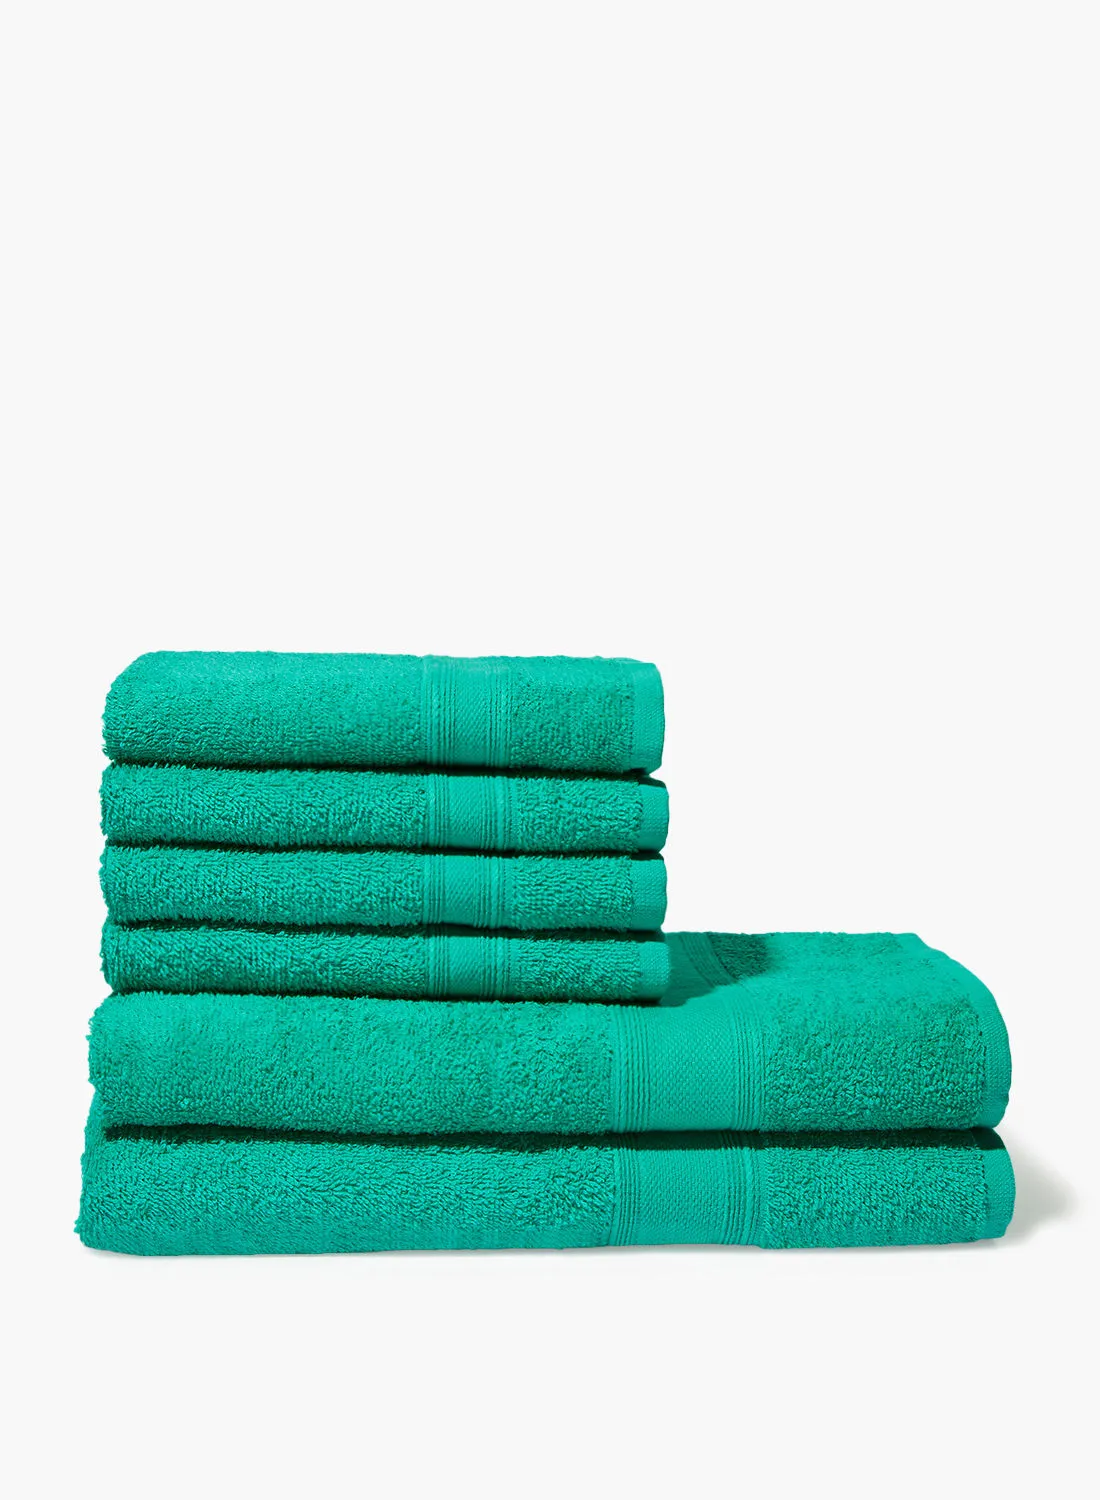 Amal 6 Piece Bathroom Towel Set - 400 GSM 100% Cotton Terry - 4 Hand Towel - 2 Bath Towel - Emerald Color -Quick Dry - Super Absorbent